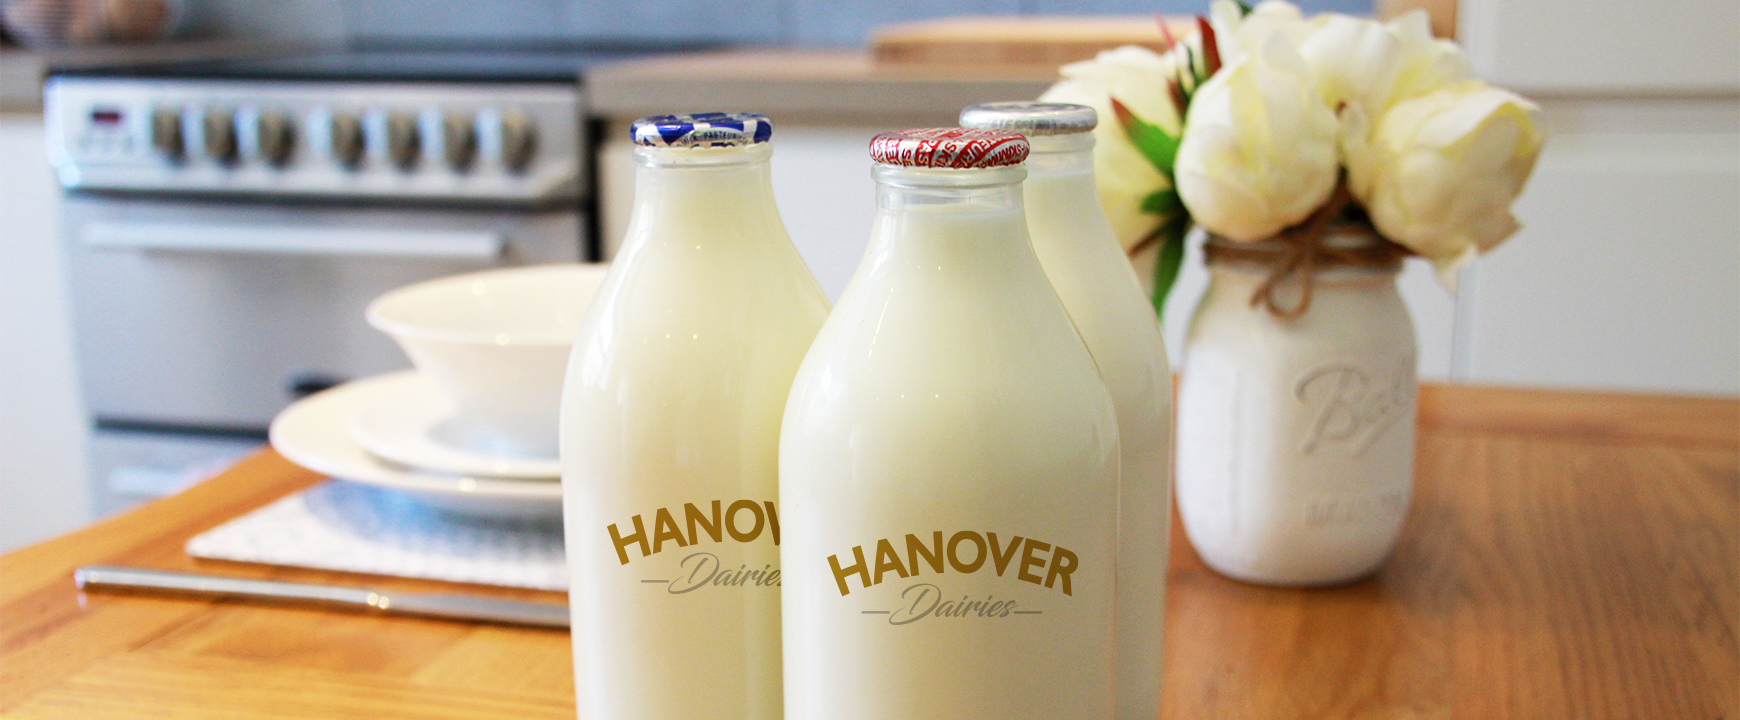 hanover-dairies-case-study-hero